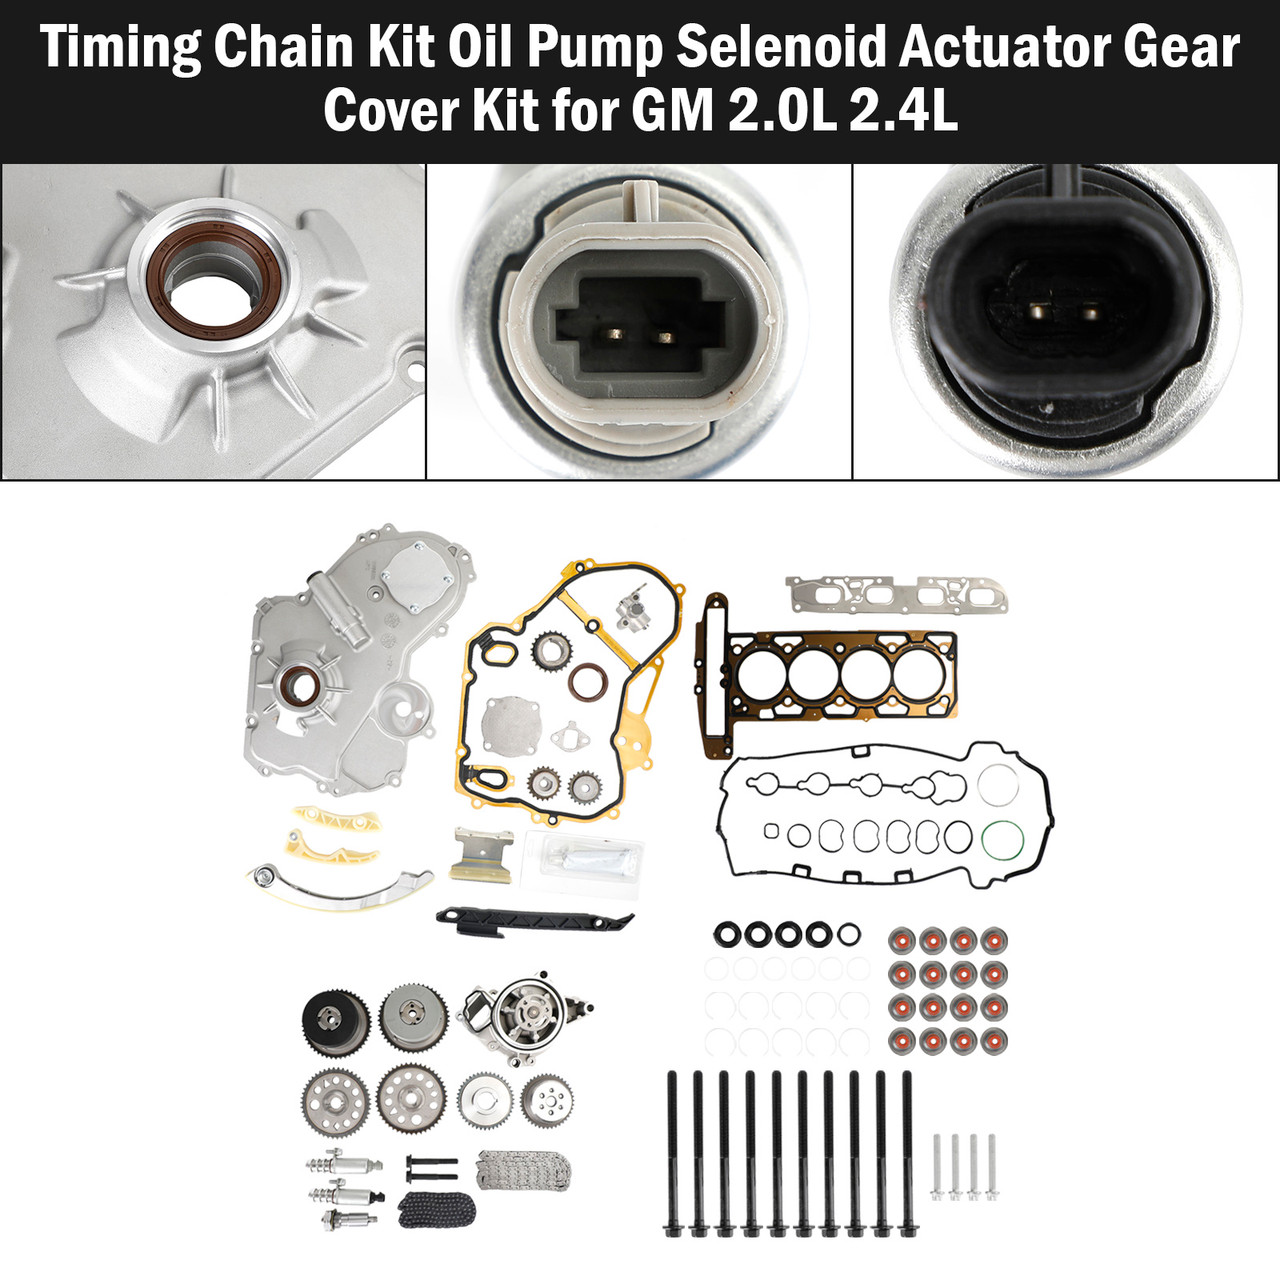 2010-2012 CHEVROLET MALIBU 2.4L Timing Chain Kit Oil Pump Selenoid Actuator Gear Cover Kit